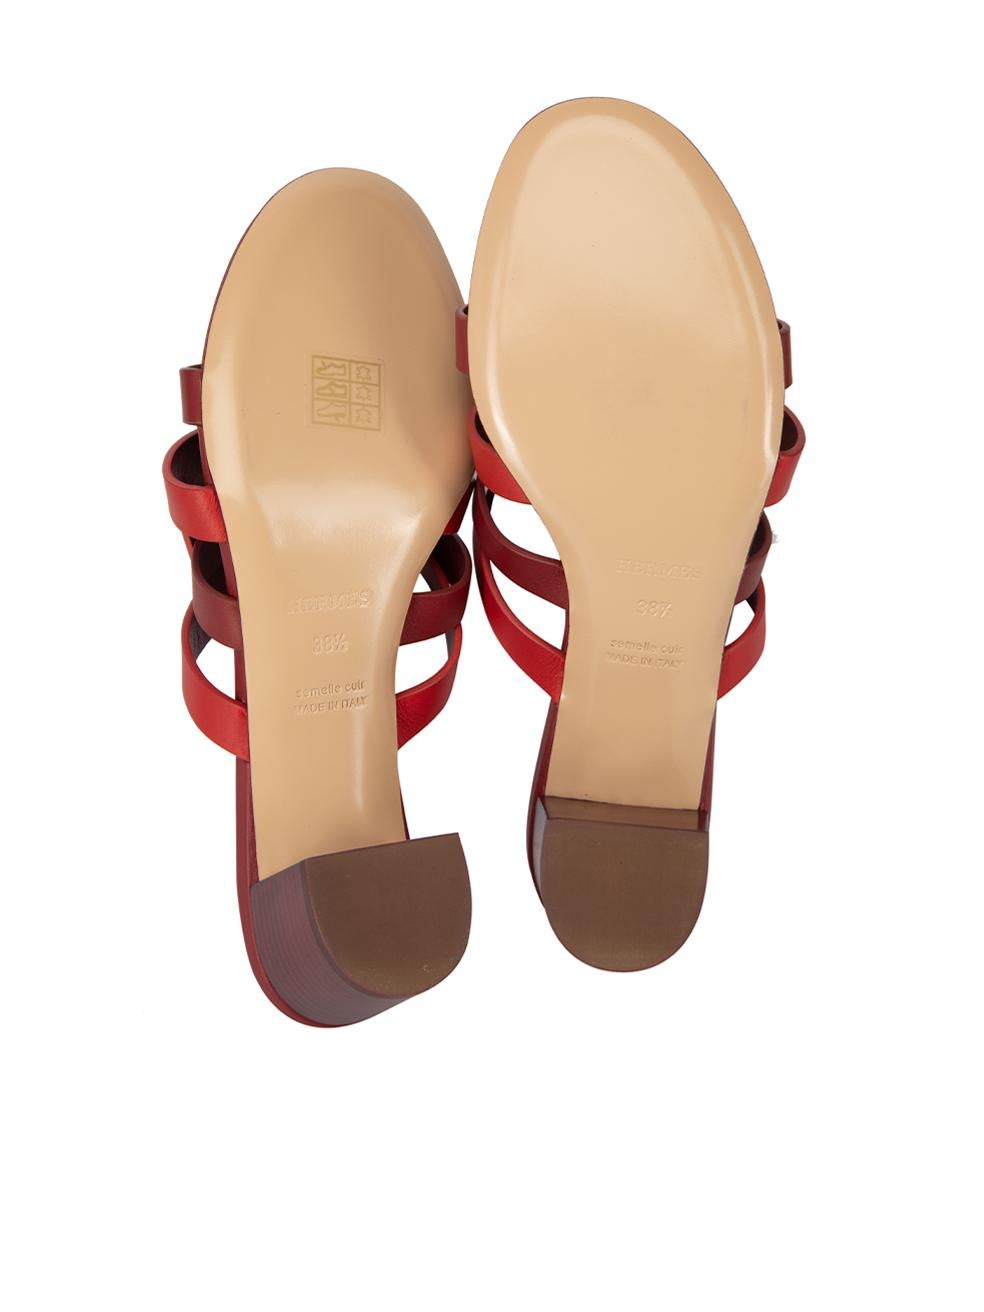 Hermès Women's Red Leather Block Heeled Sandals 2